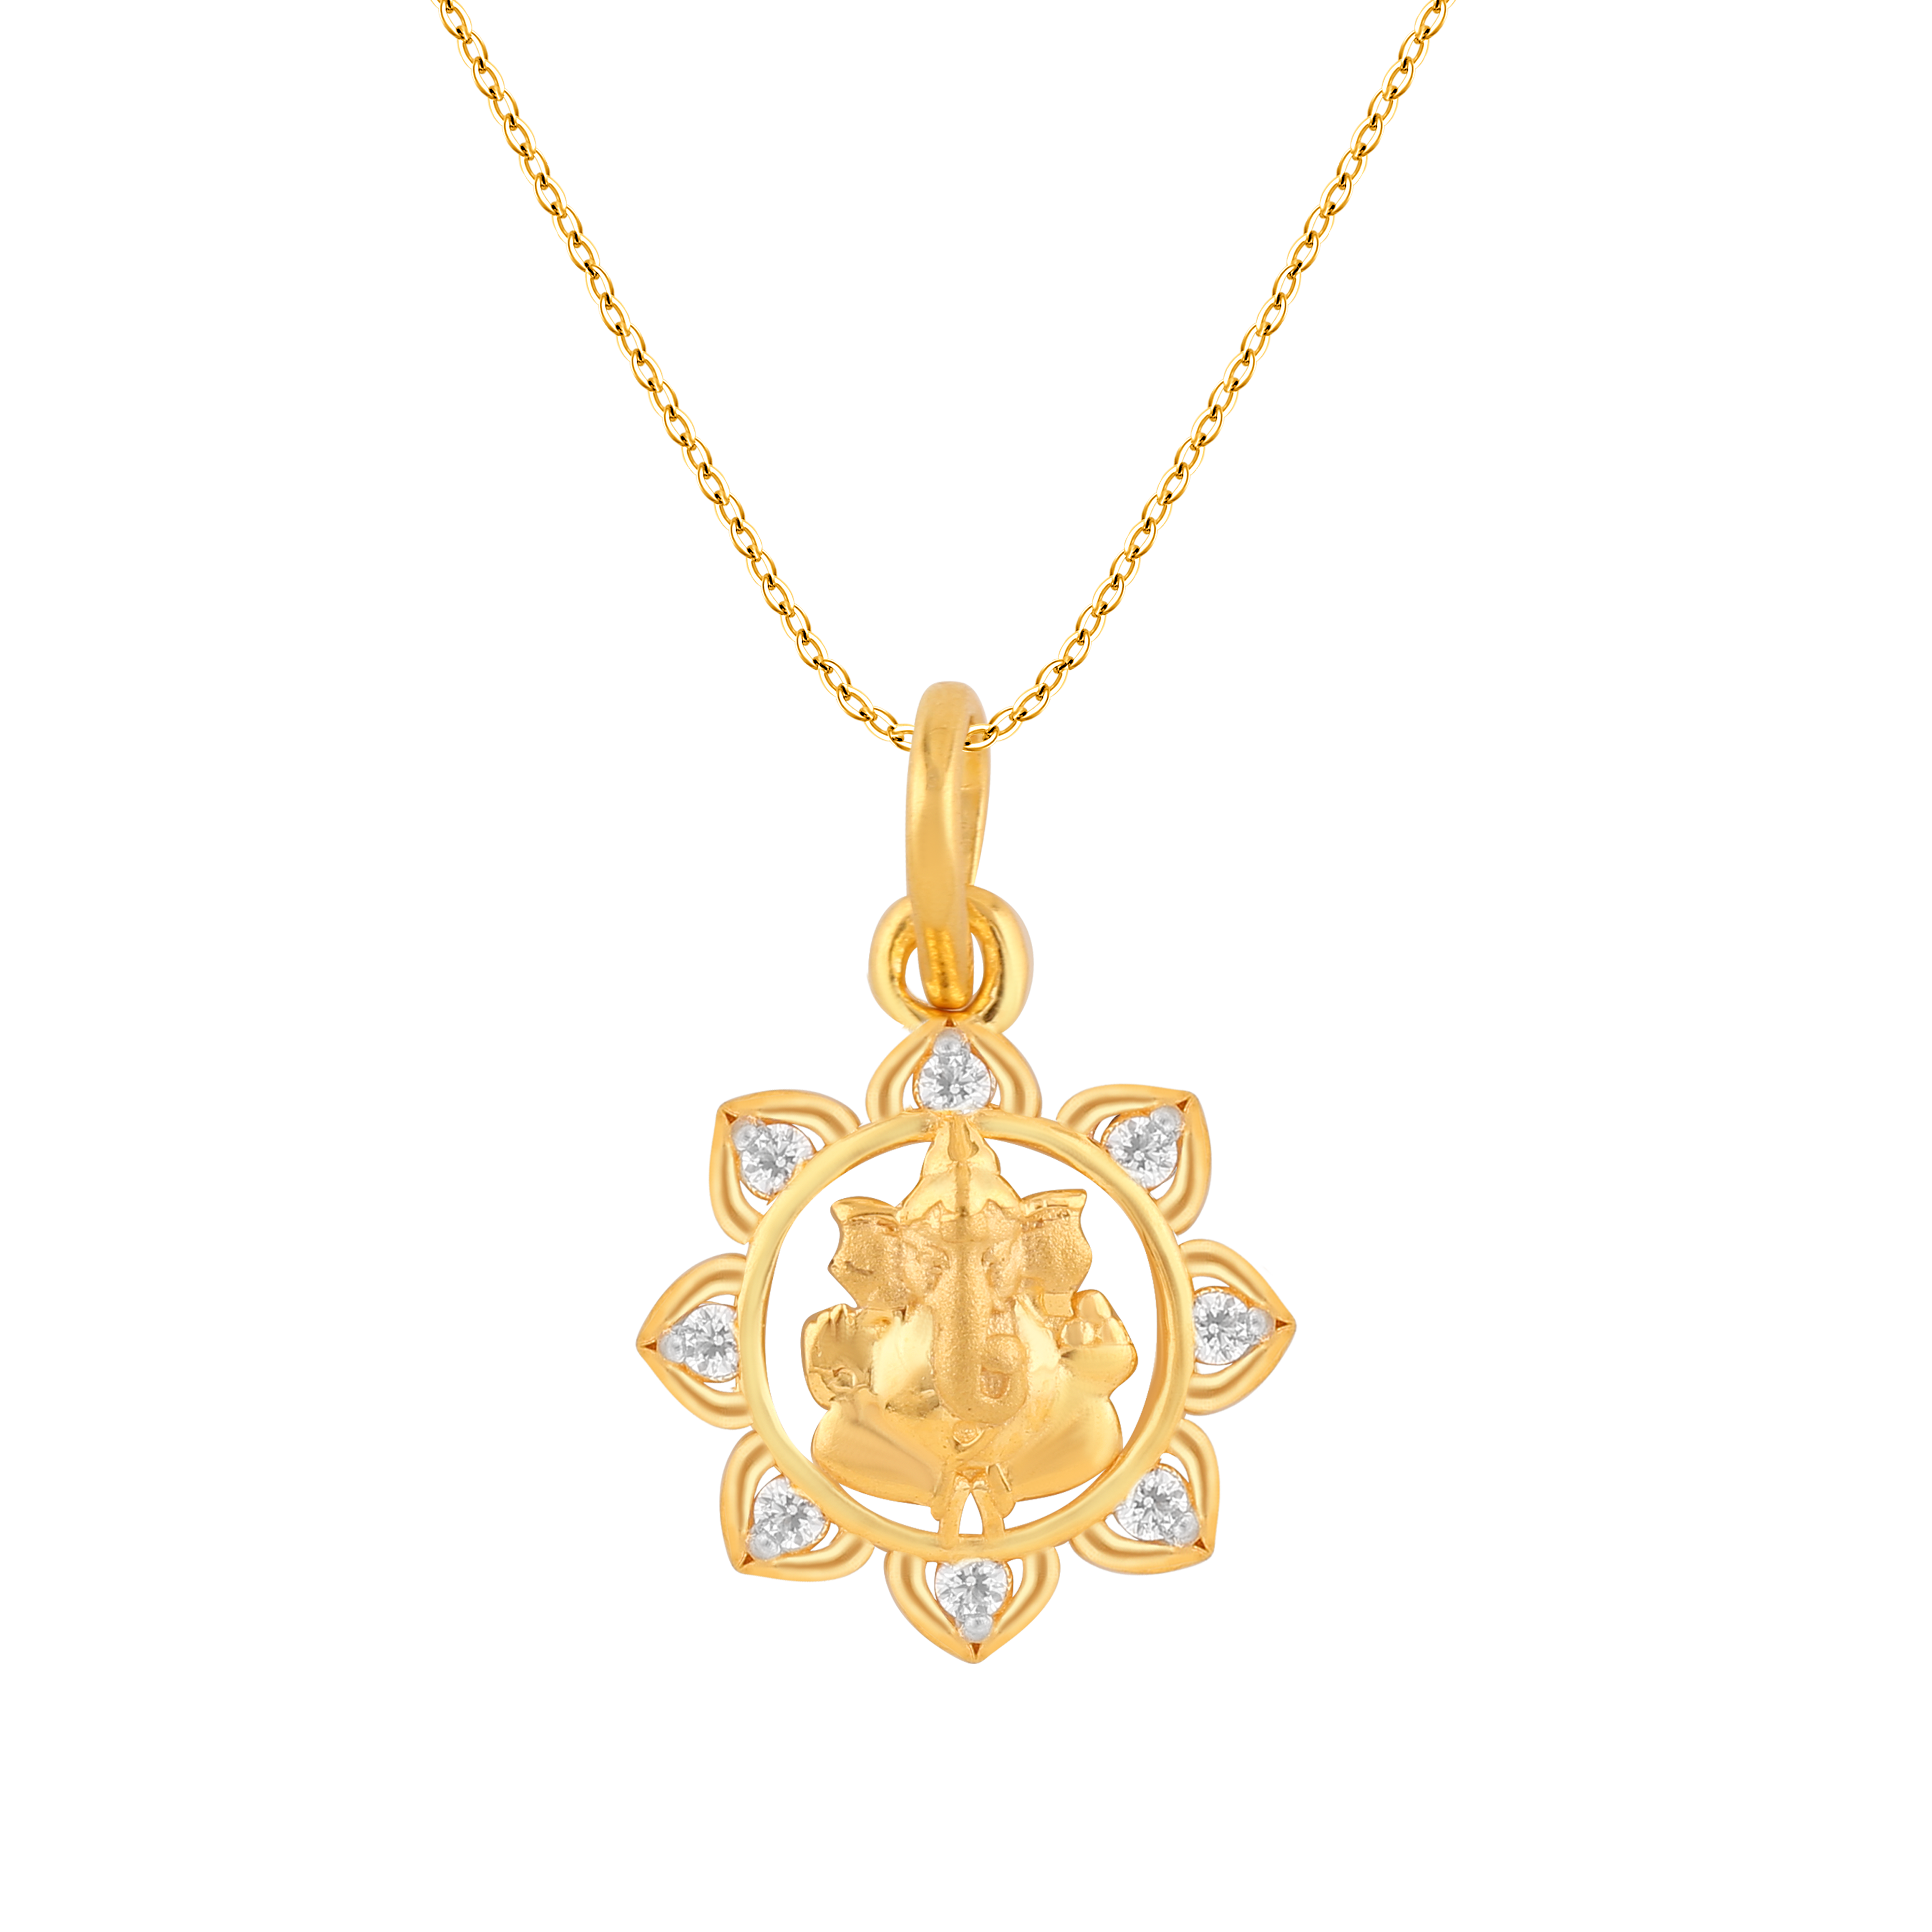 Elegant 22 Karat Lord Ganesha Gold Pendant